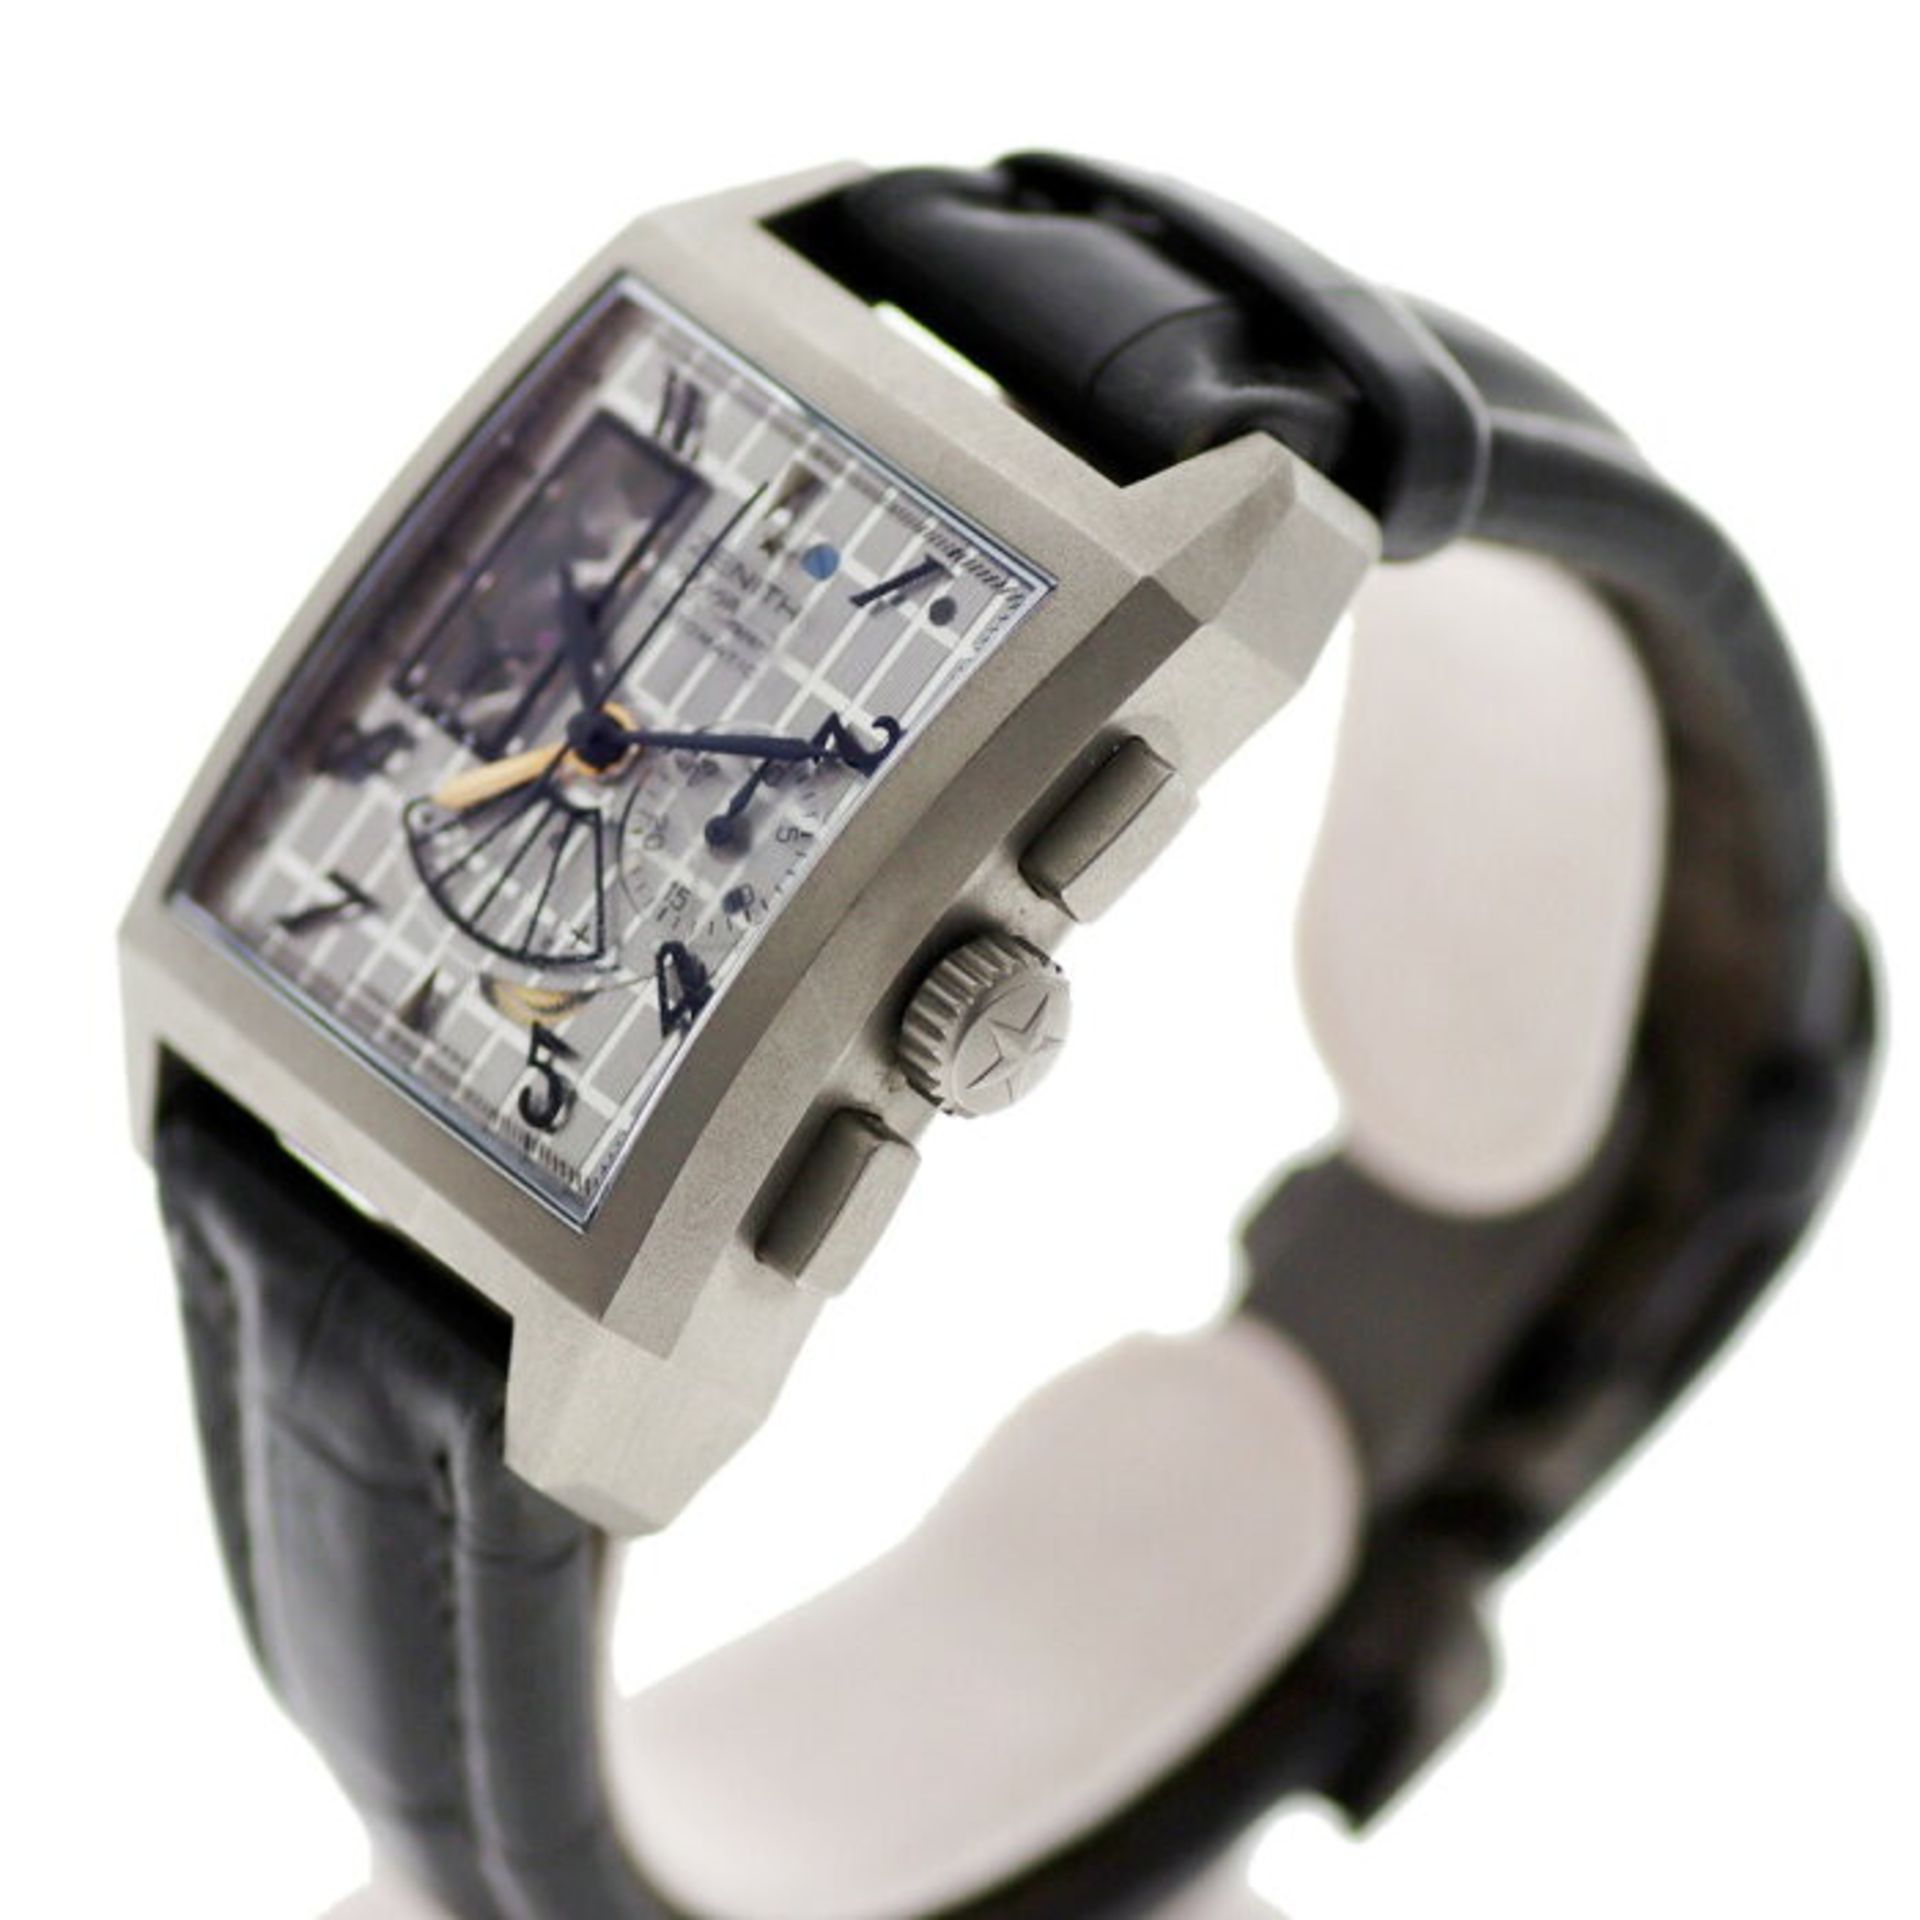 Zenith / Port Royal Open Concept - Gentlmen's Titanium Wrist Watch - Image 7 of 13